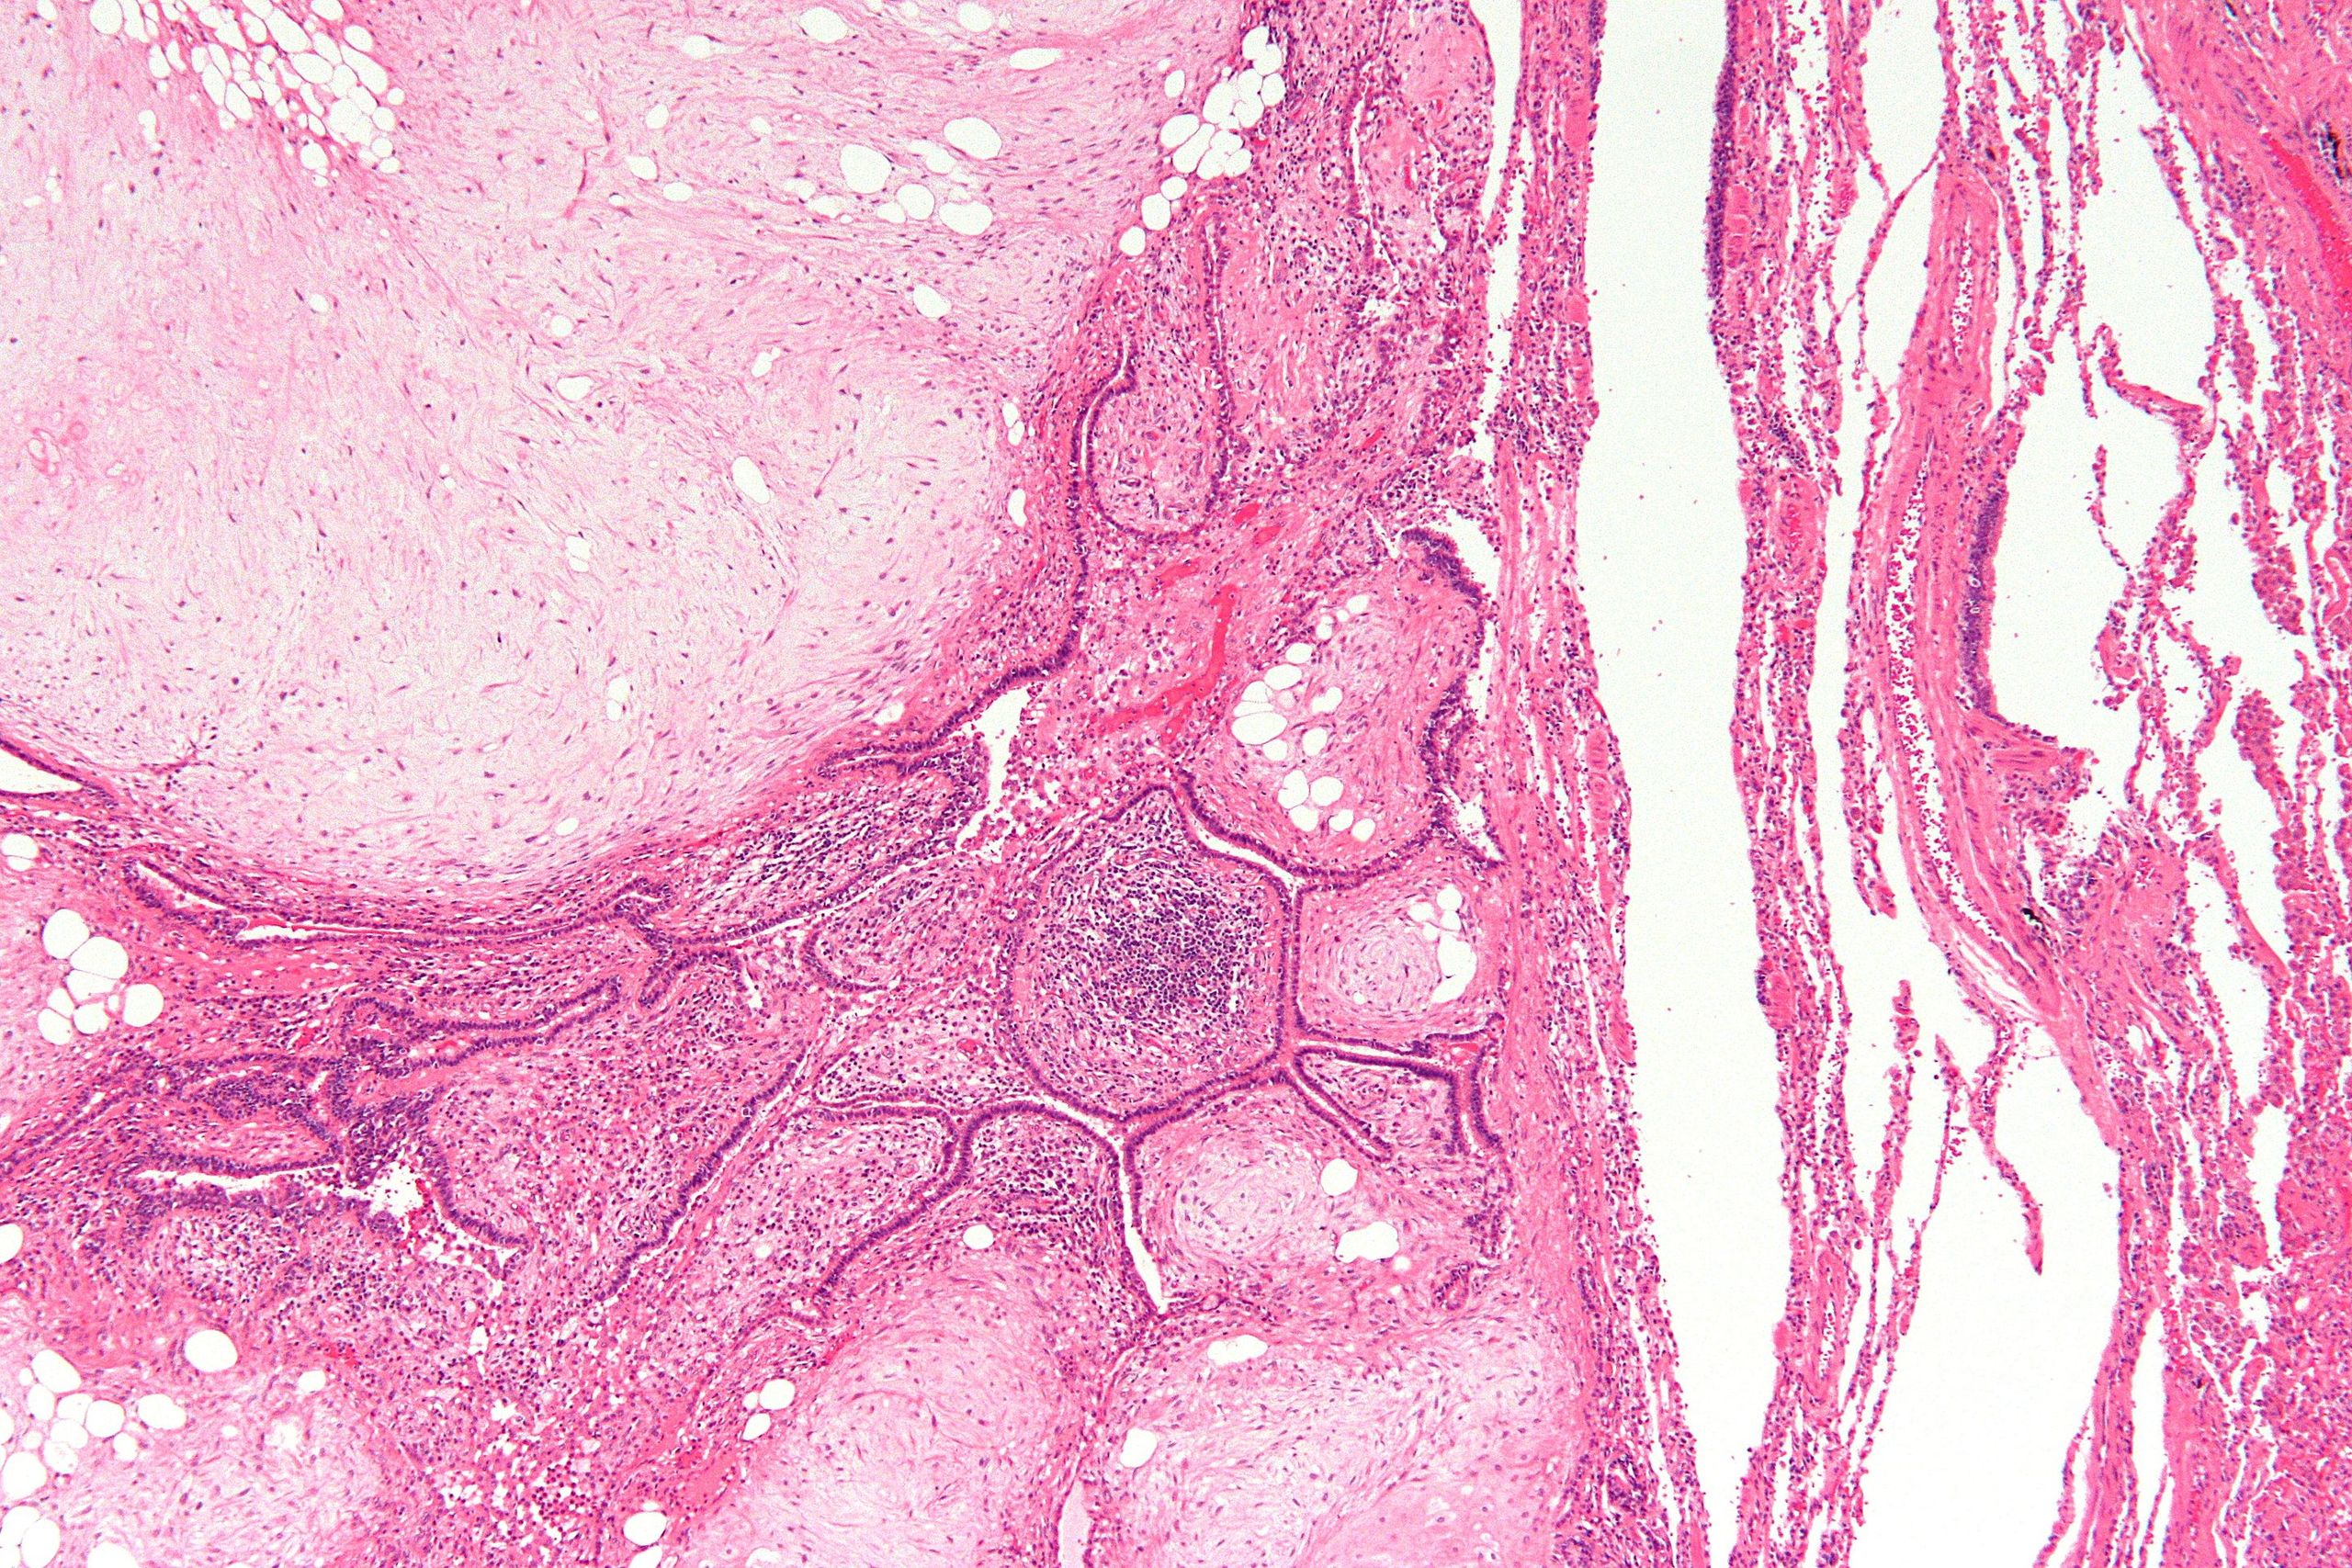 Low magnification micrograph of a pulmonary hamartoma. H&E stain.[9]